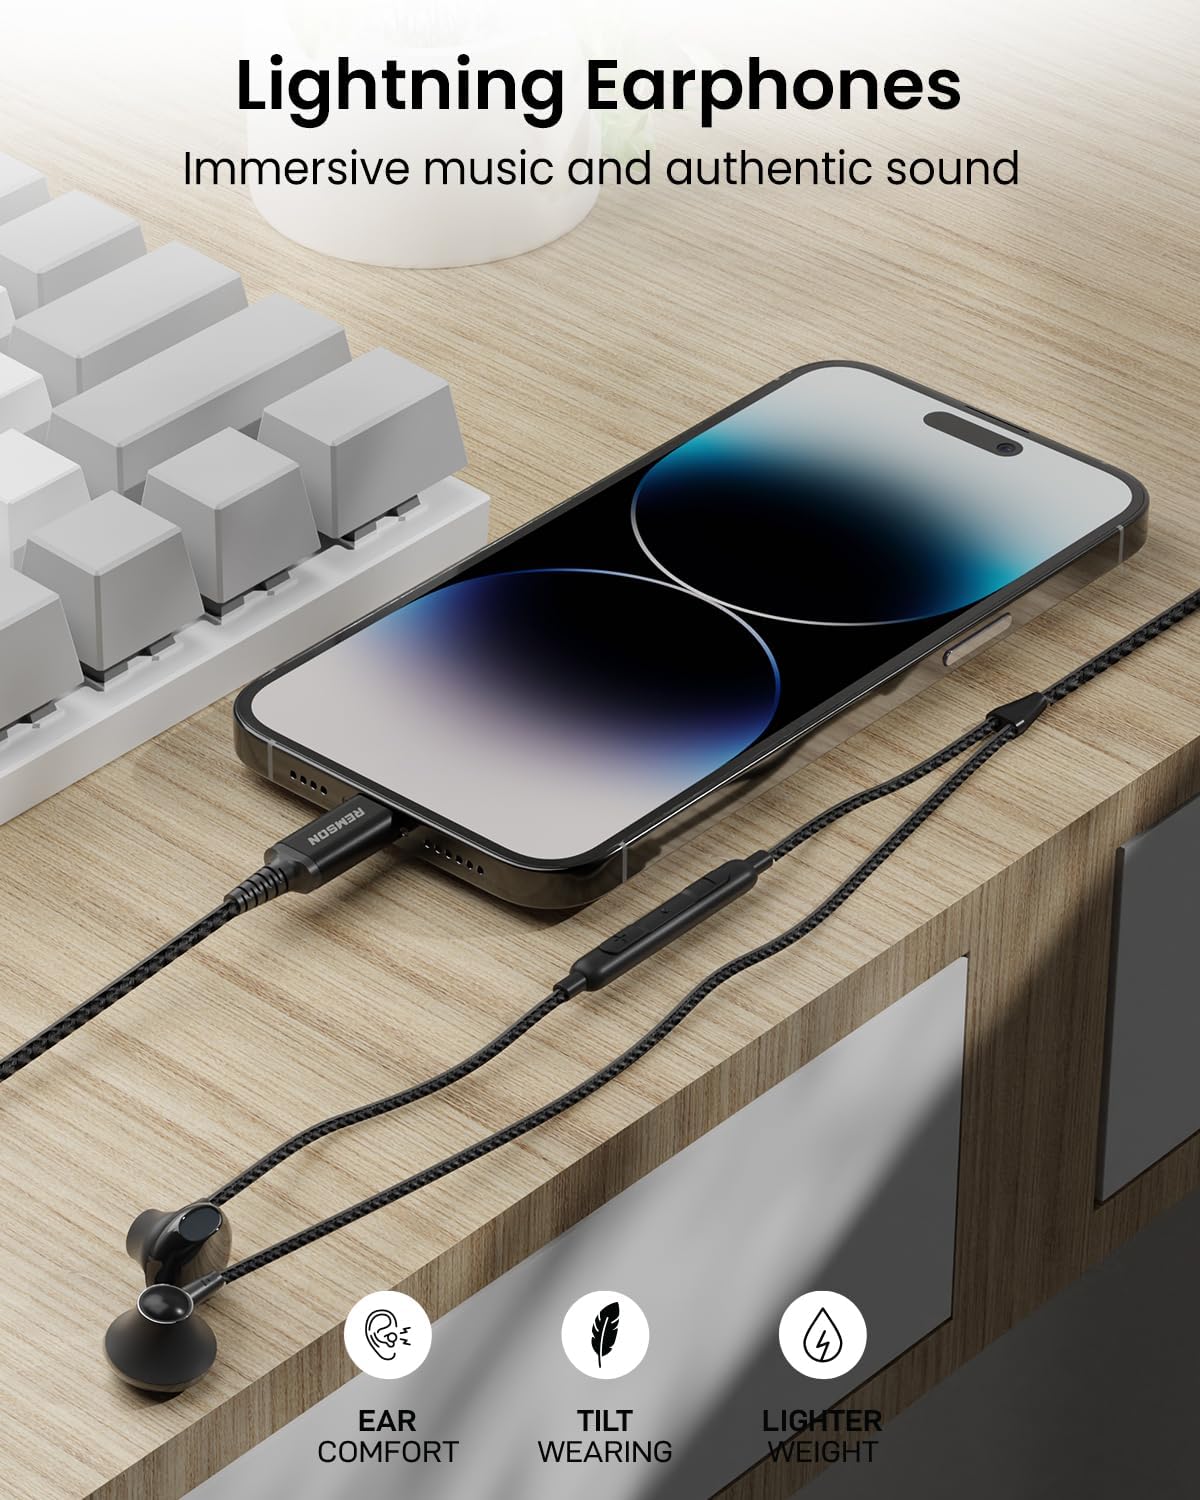 [Apple MFi Certified] Remson Wired Stereo Earphones MFi Lightning Connector Headphones/Earphones/Earbuds Hi-Fi with In-Line Remote - Black